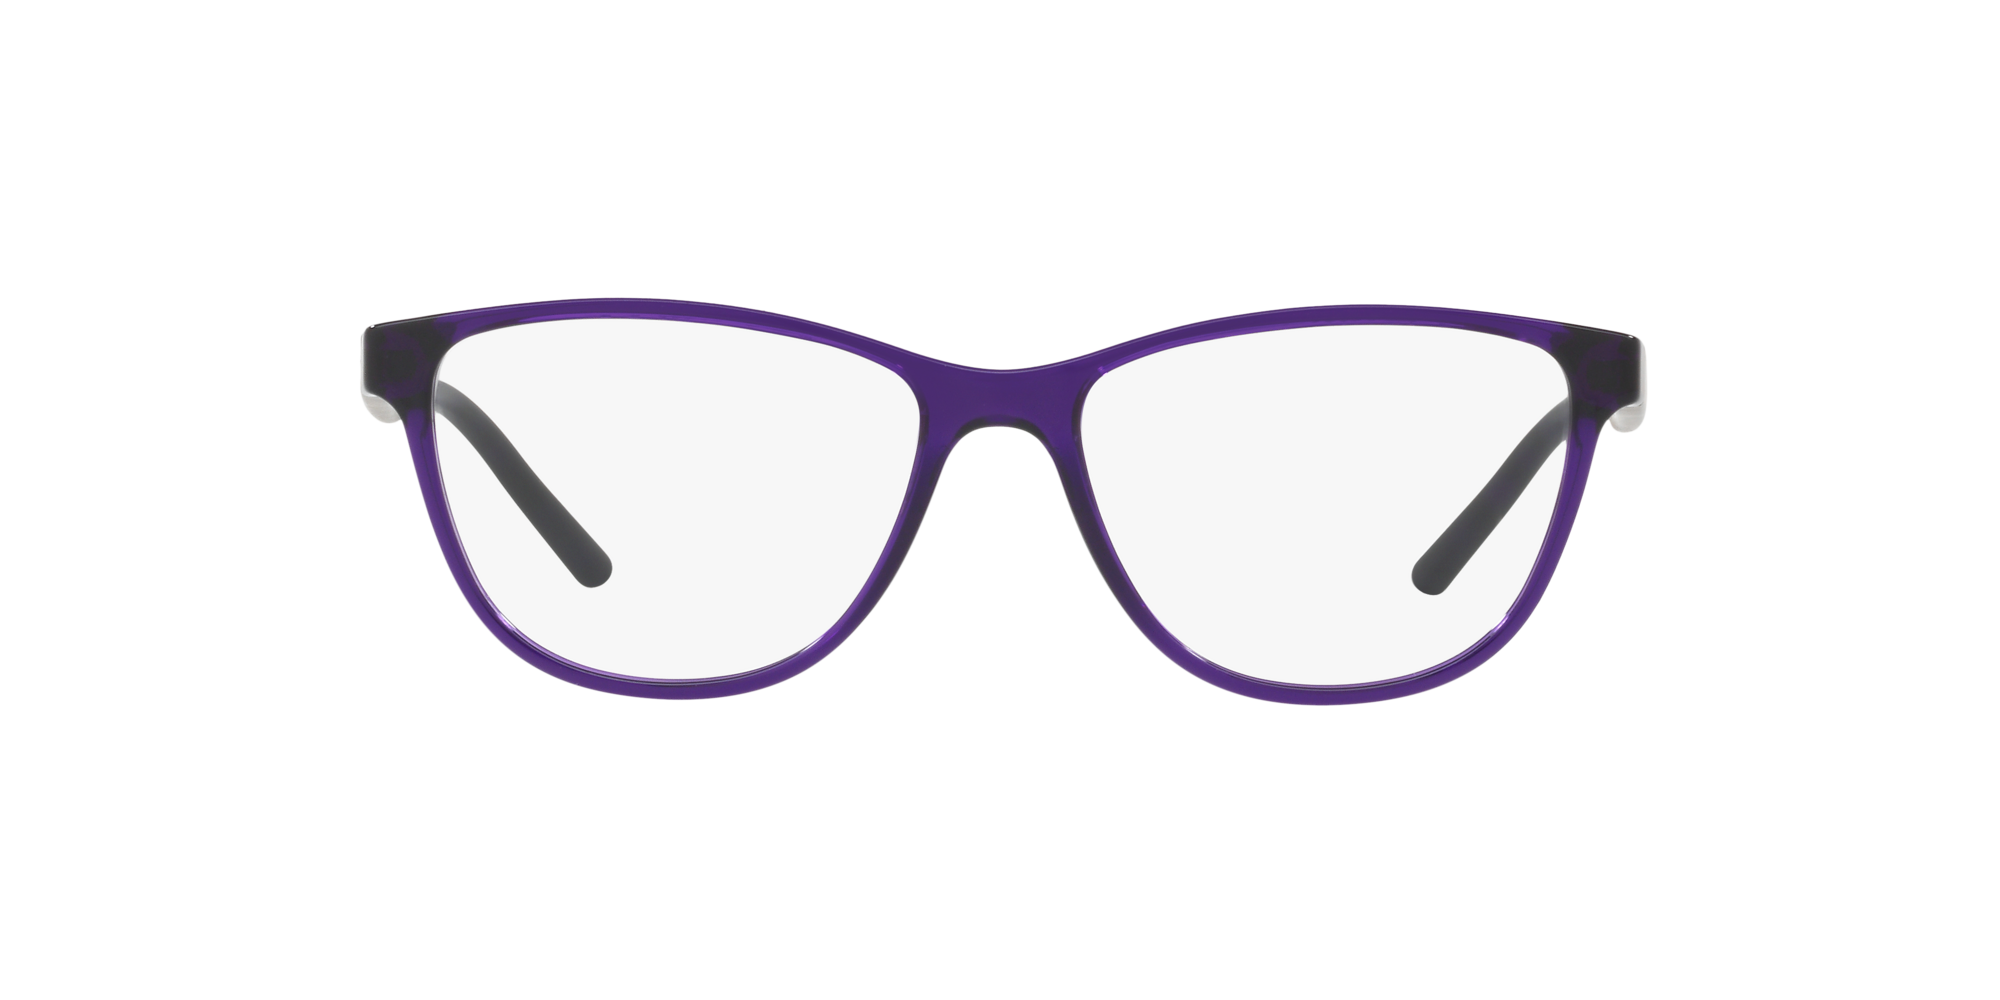 armani exchange purple glasses